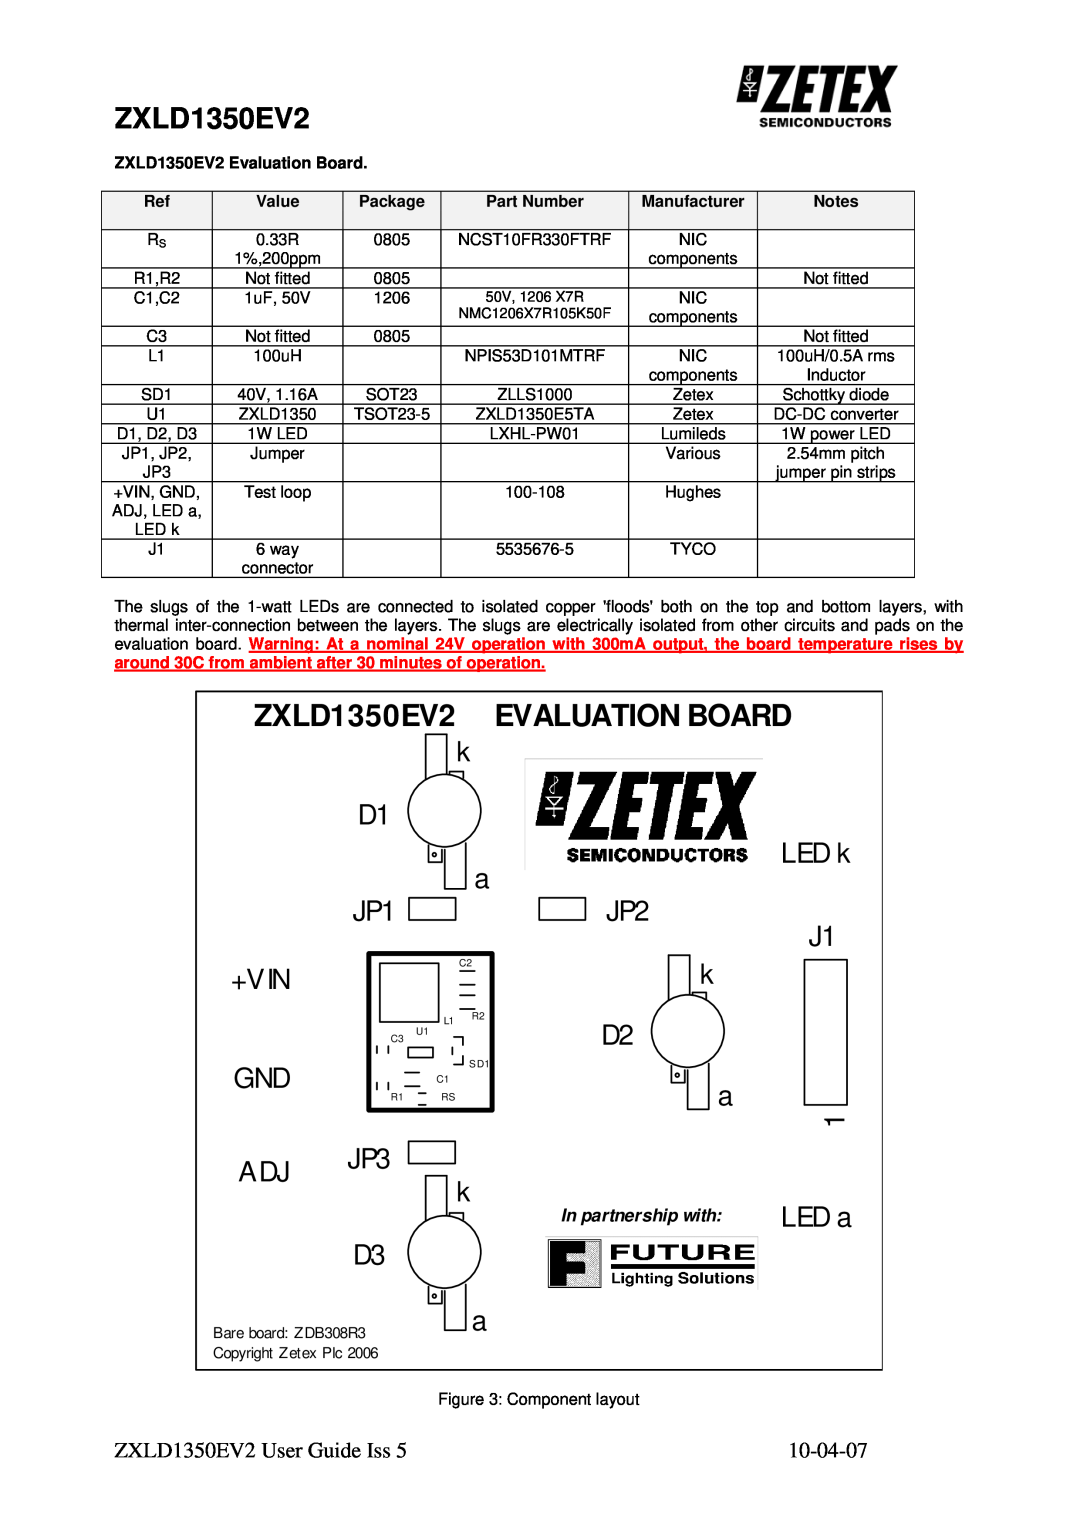 Zetex Semiconductors PLC zxld1350ev2 ZXLD1350EV2 EVALUATION BOARD, k D1 a JP1, LED k JP2 J1, +Vin Gnd, k D2, ADJ JP3 D3 